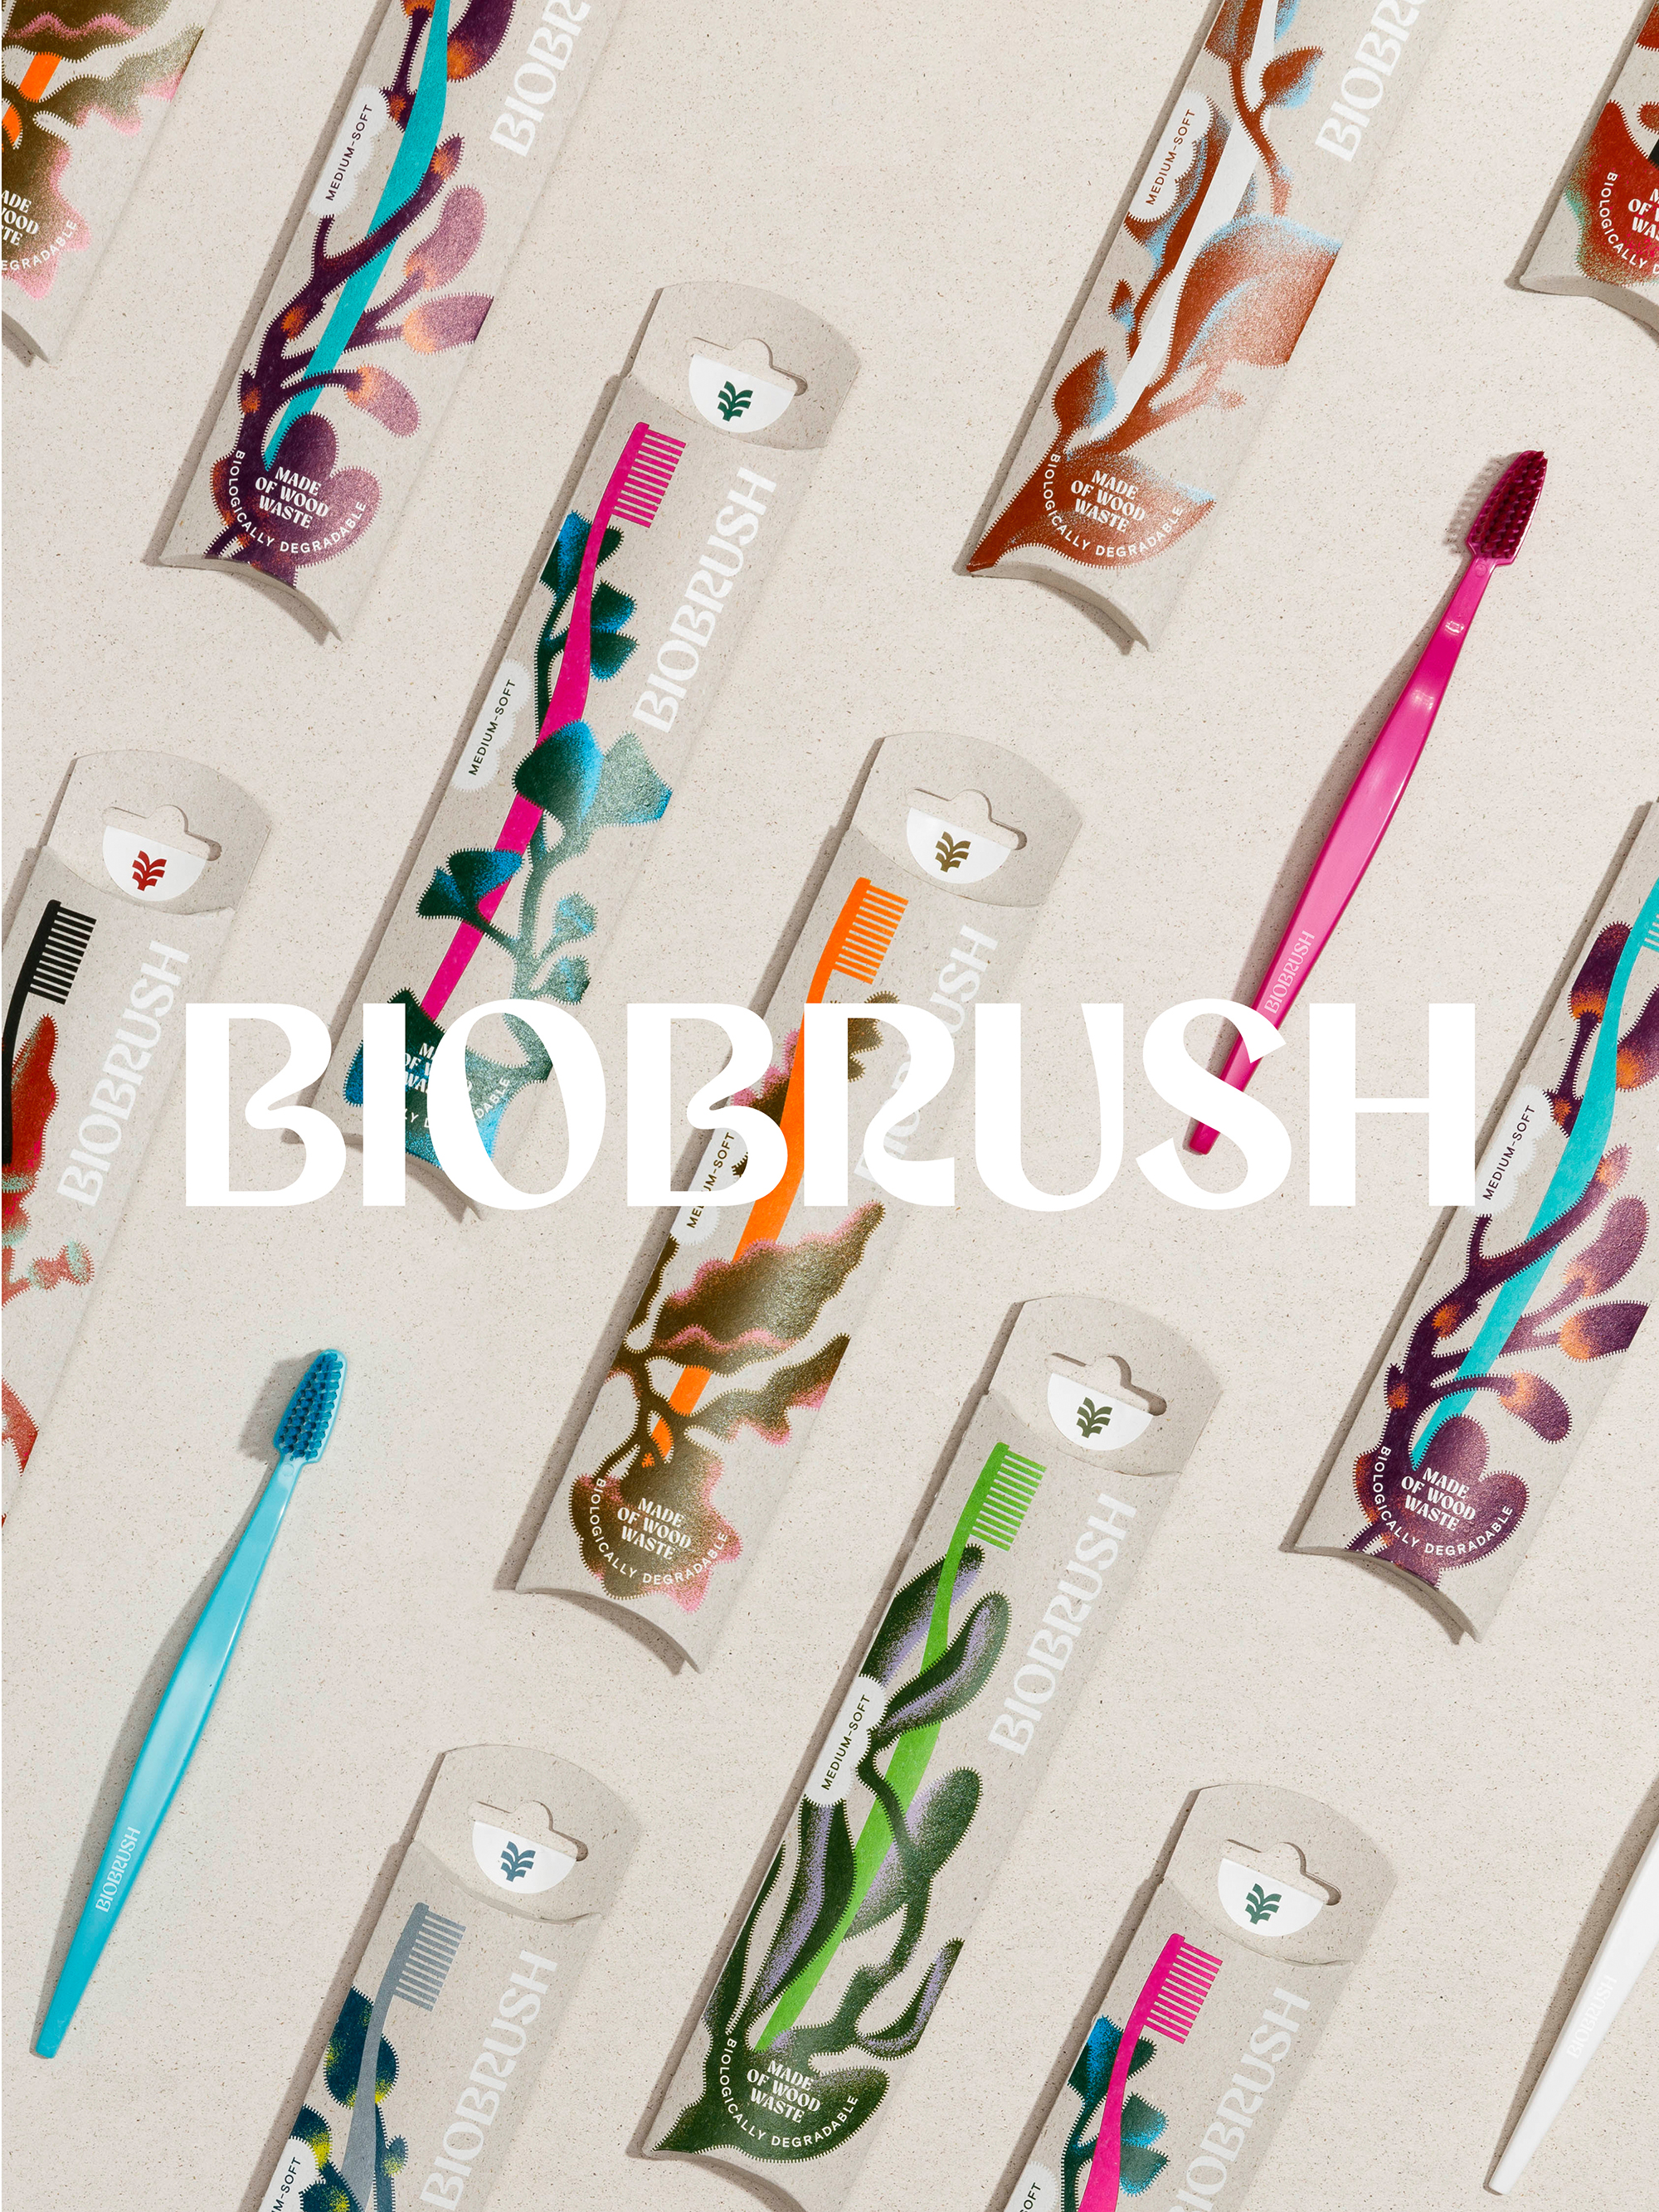 Biobrush, Eco-modern Brand Design